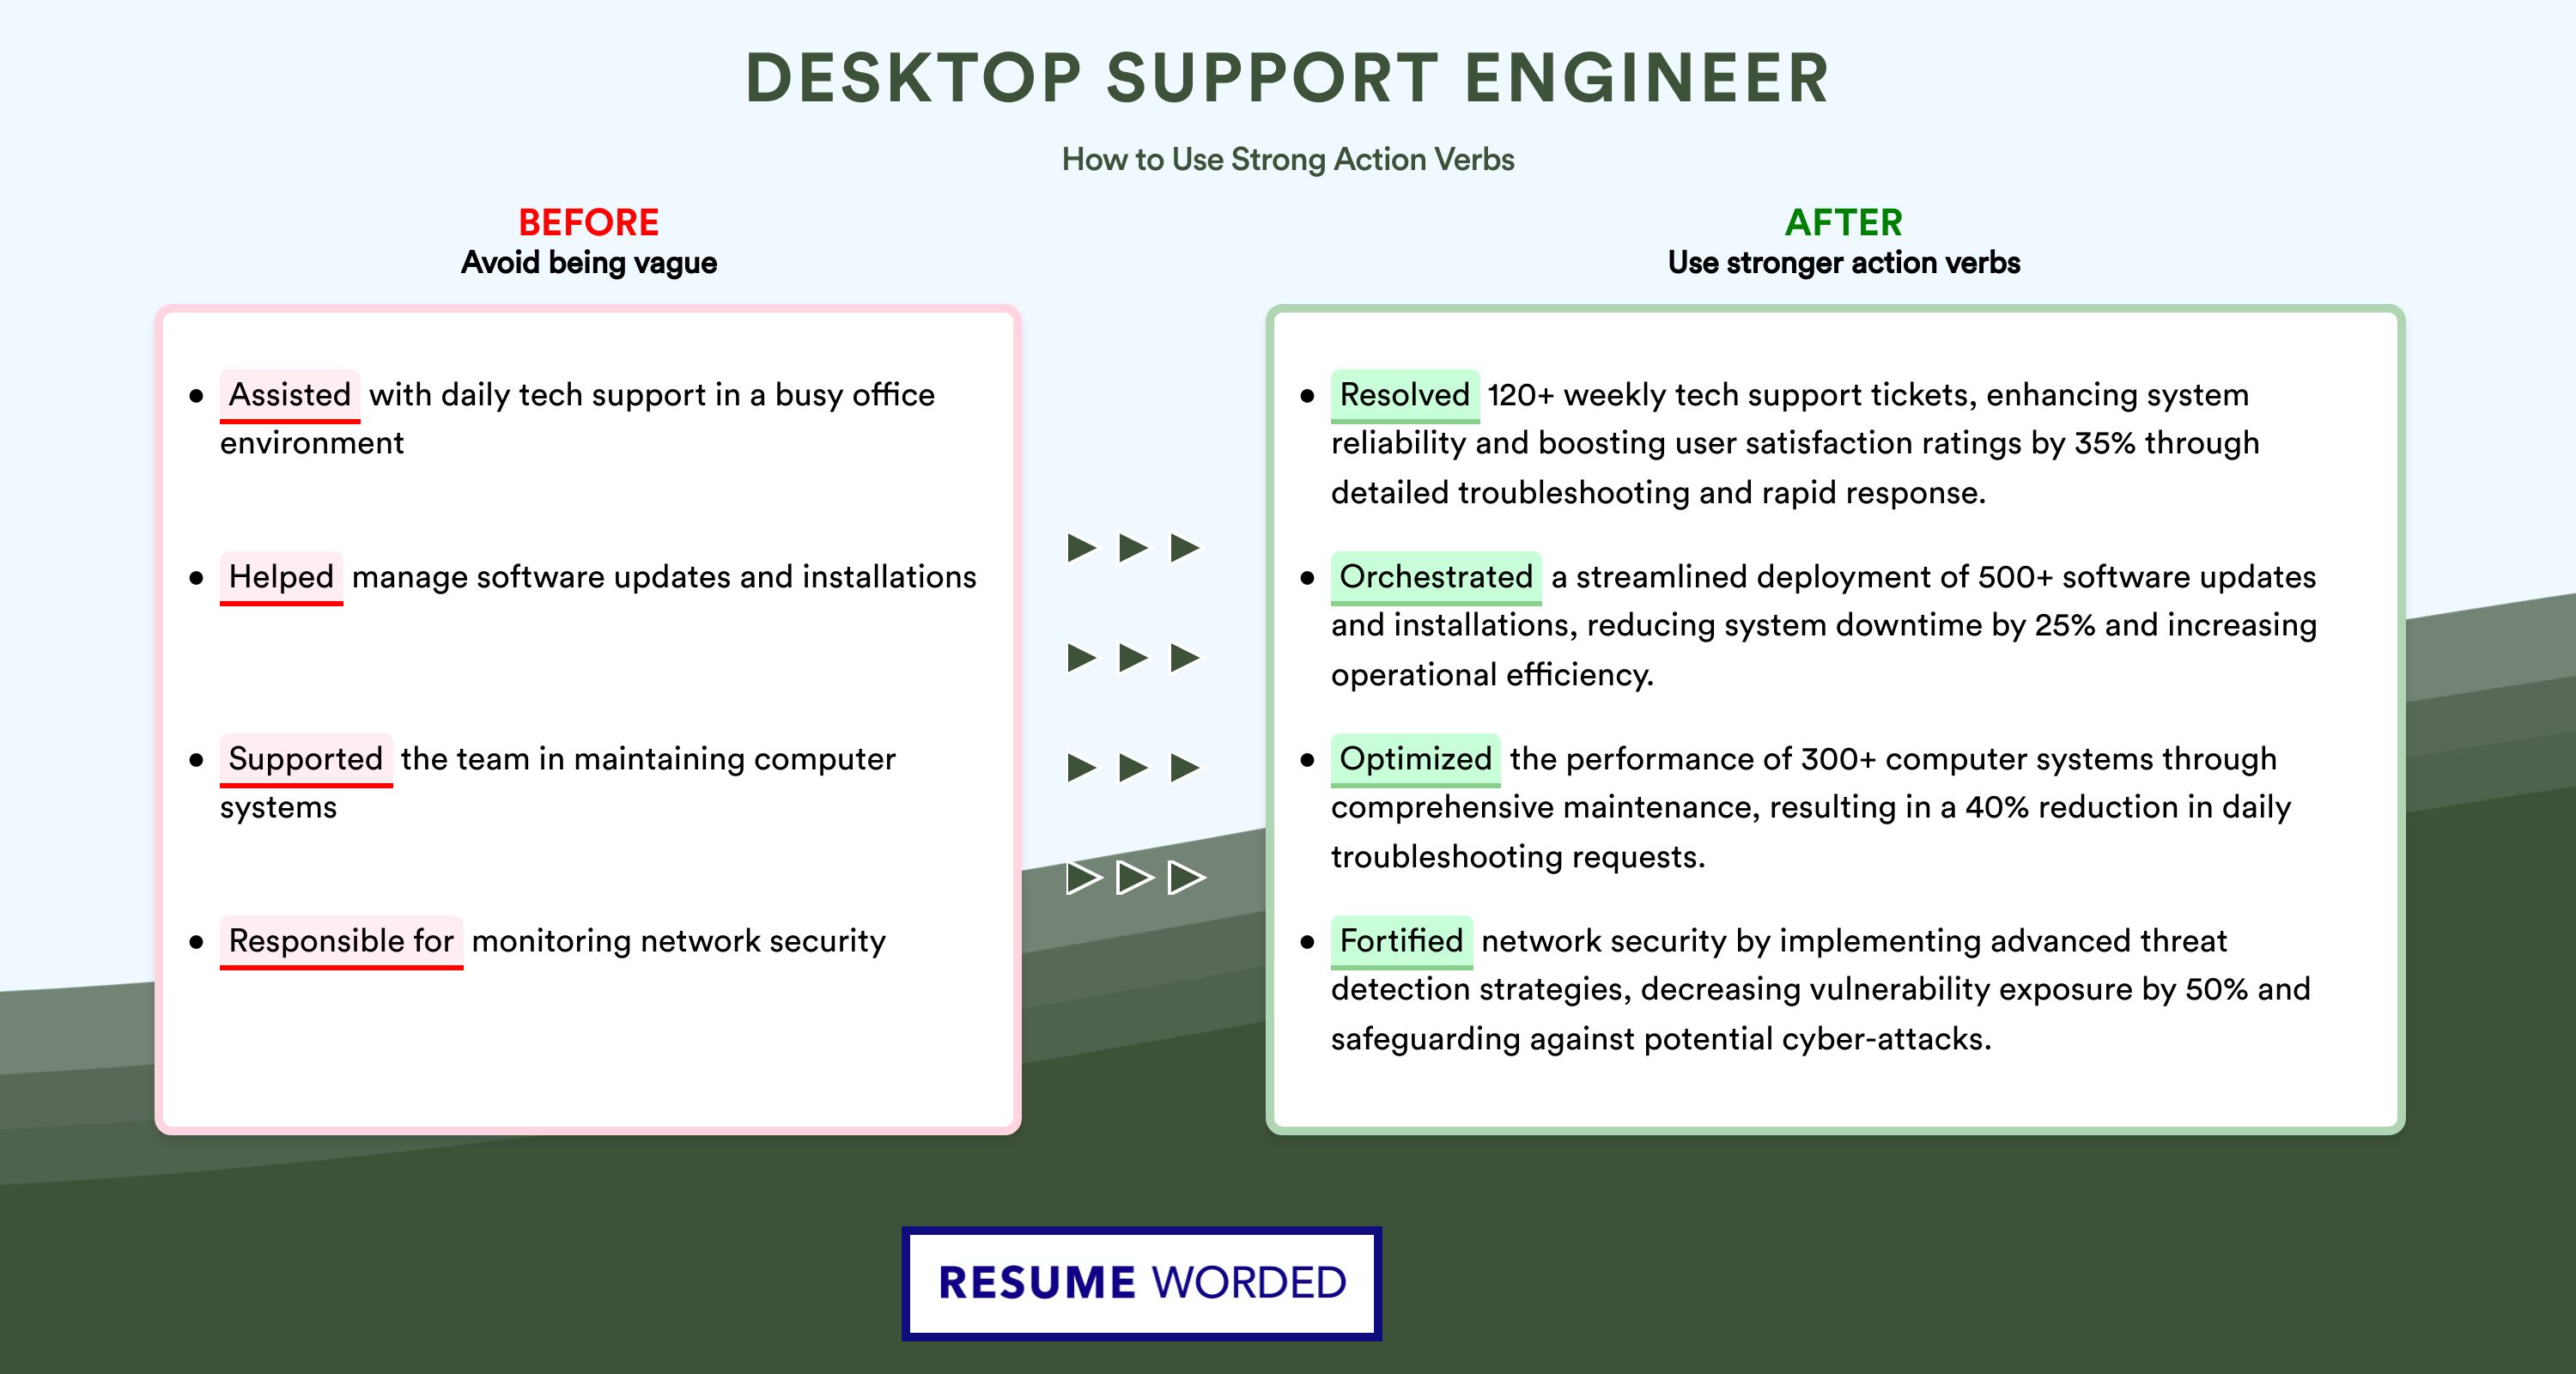 Action Verbs for Desktop Support Engineer